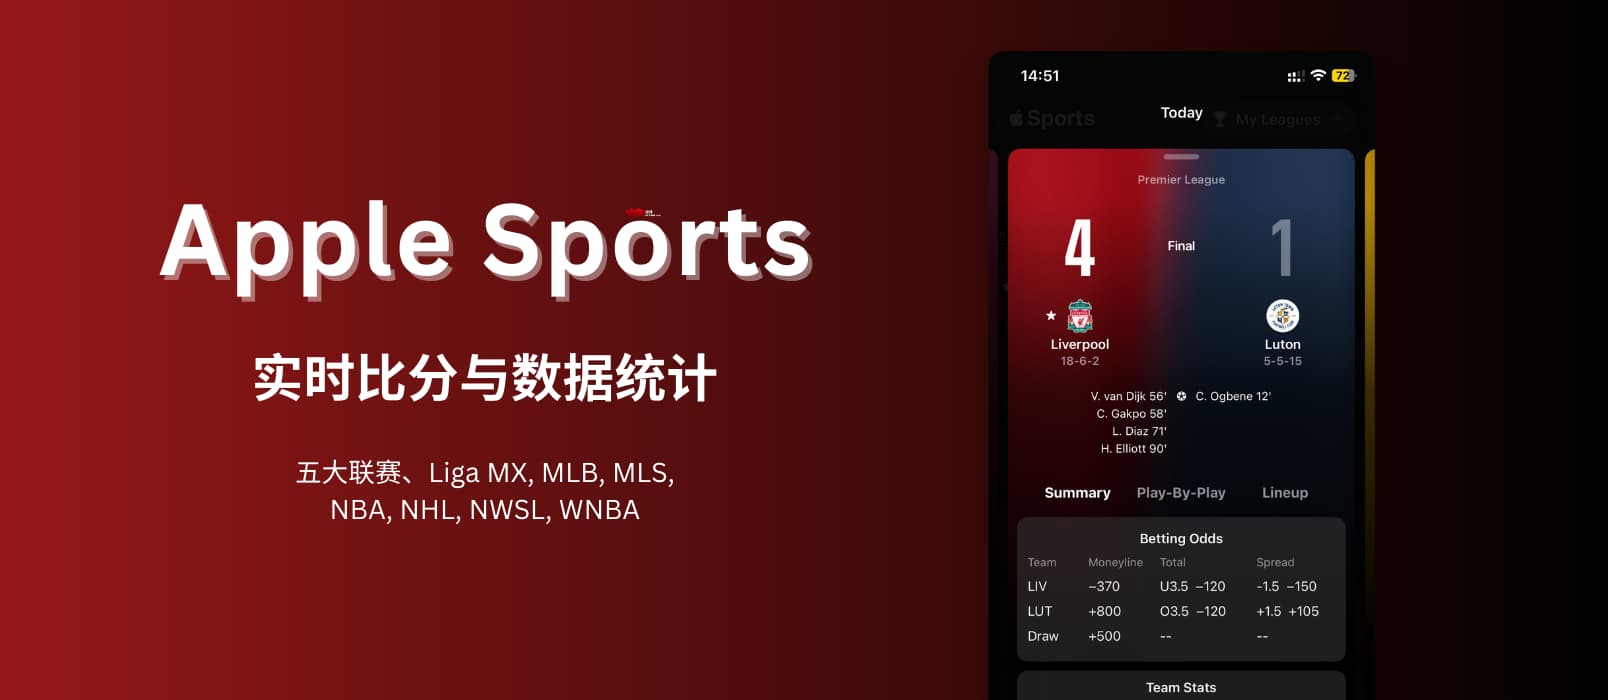 Apple Sports 发布，追踪实时你喜爱的球队和联赛比分和统计数据，包括五大联赛、NBA、MLB、MLS 等，无国内联赛[iPhone]